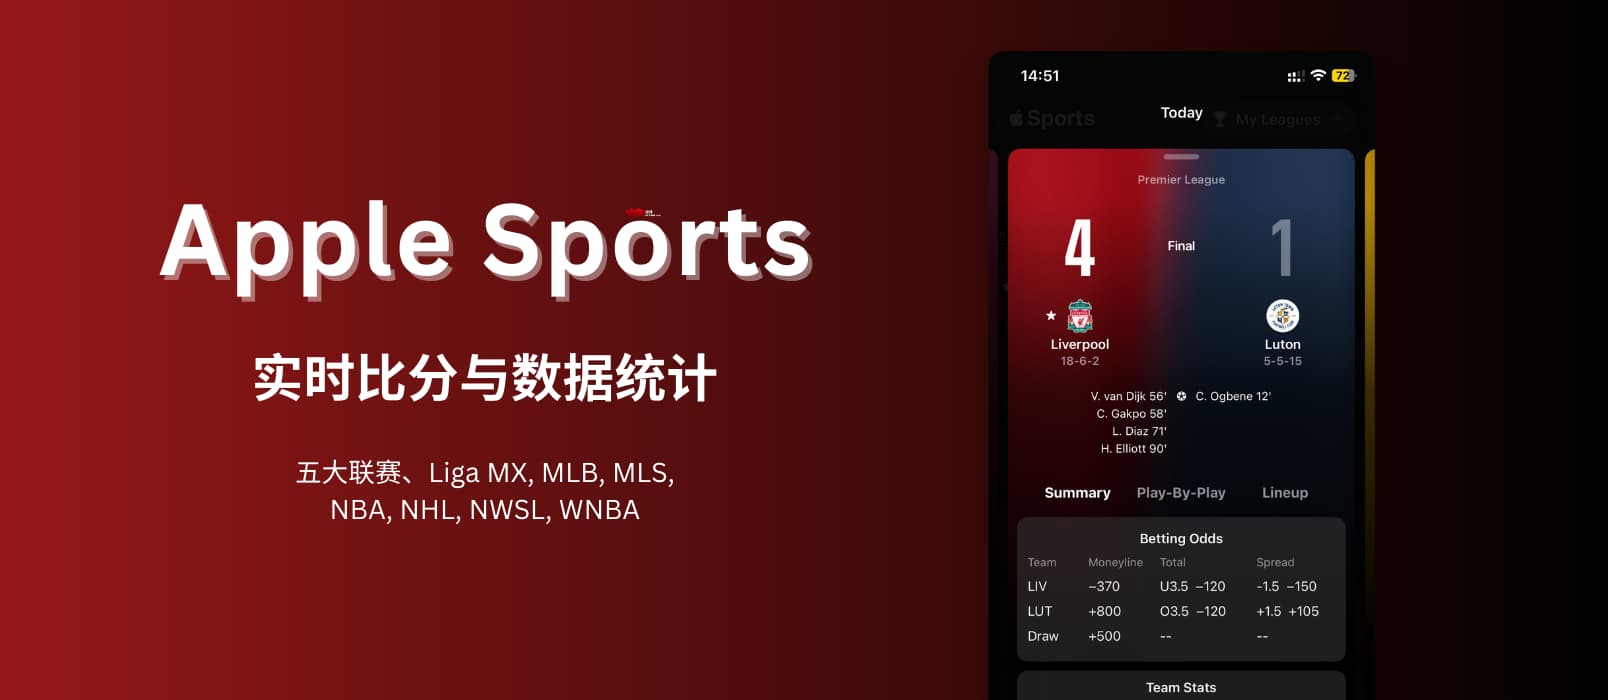 Apple Sports 发布，追踪实时你喜爱的球队和联赛比分和统计数据，包括五大联赛、NBA、MLB、MLS 等，无国内联赛[iPhone]